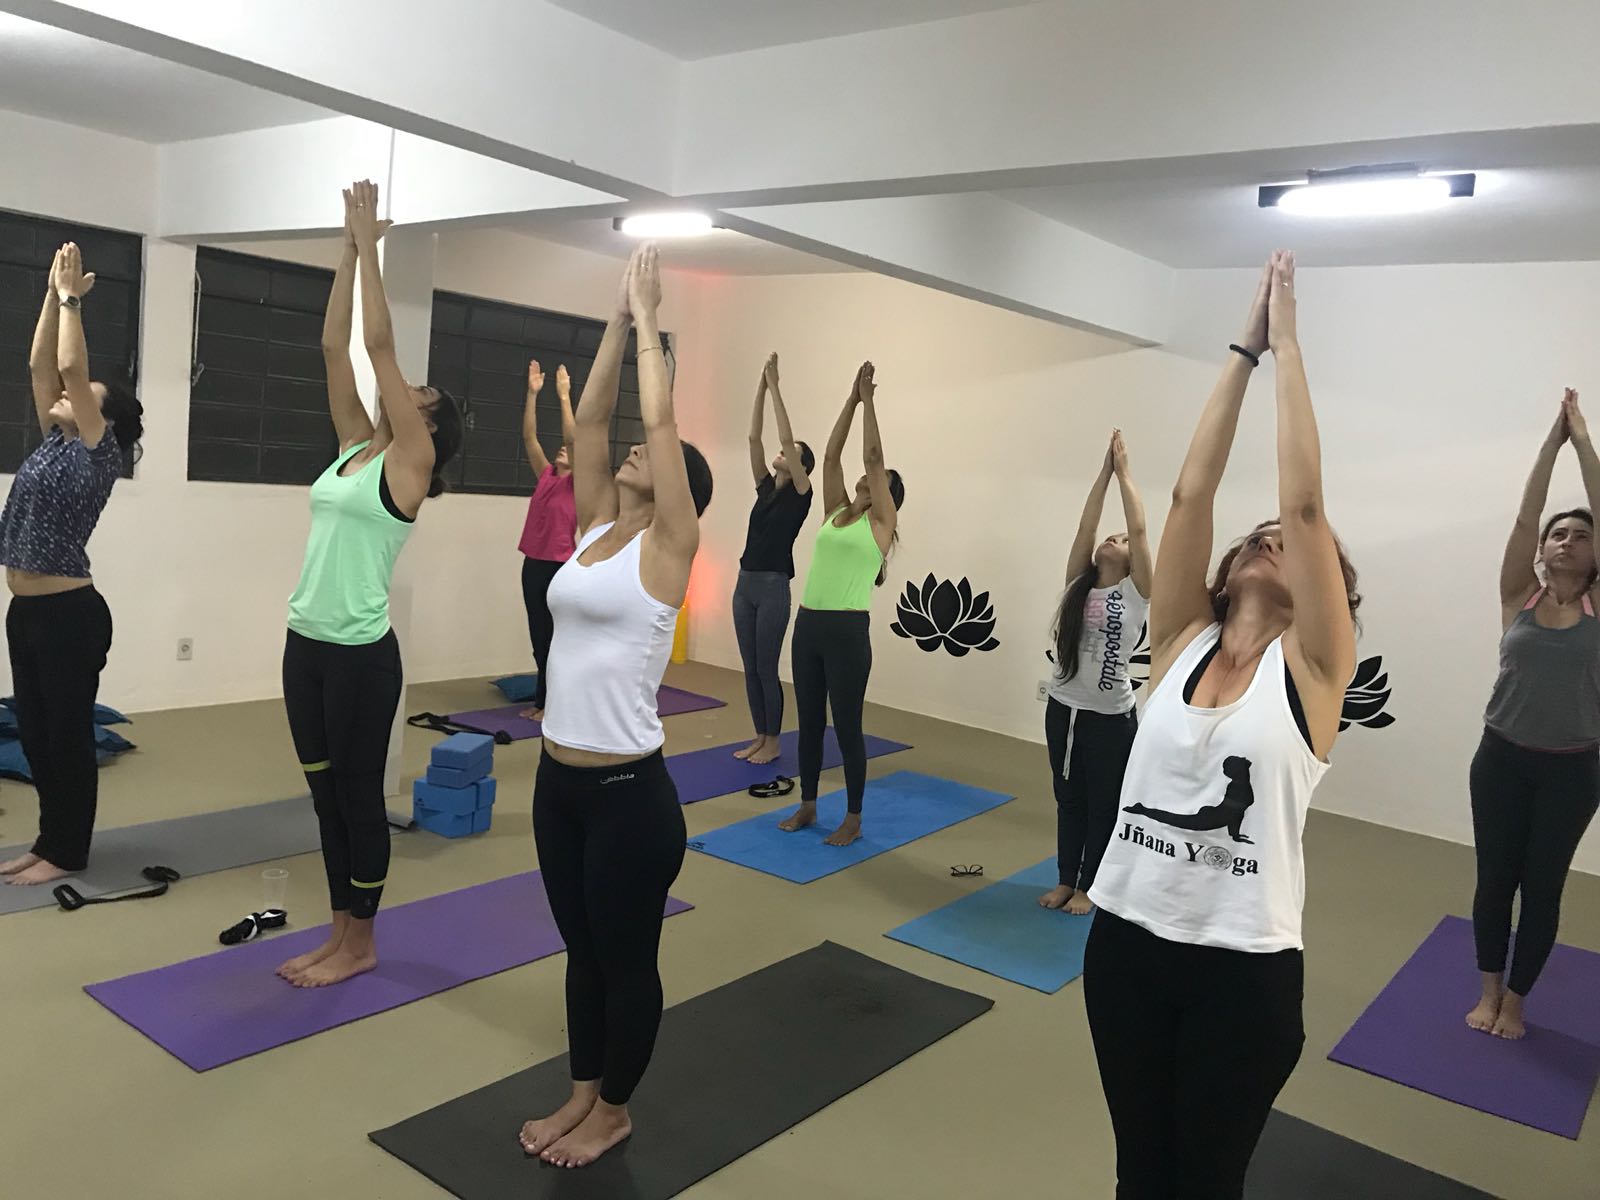  Estúdio promove aulas gratuitas de yoga, tai chi chuan e ninjutsu na Praia